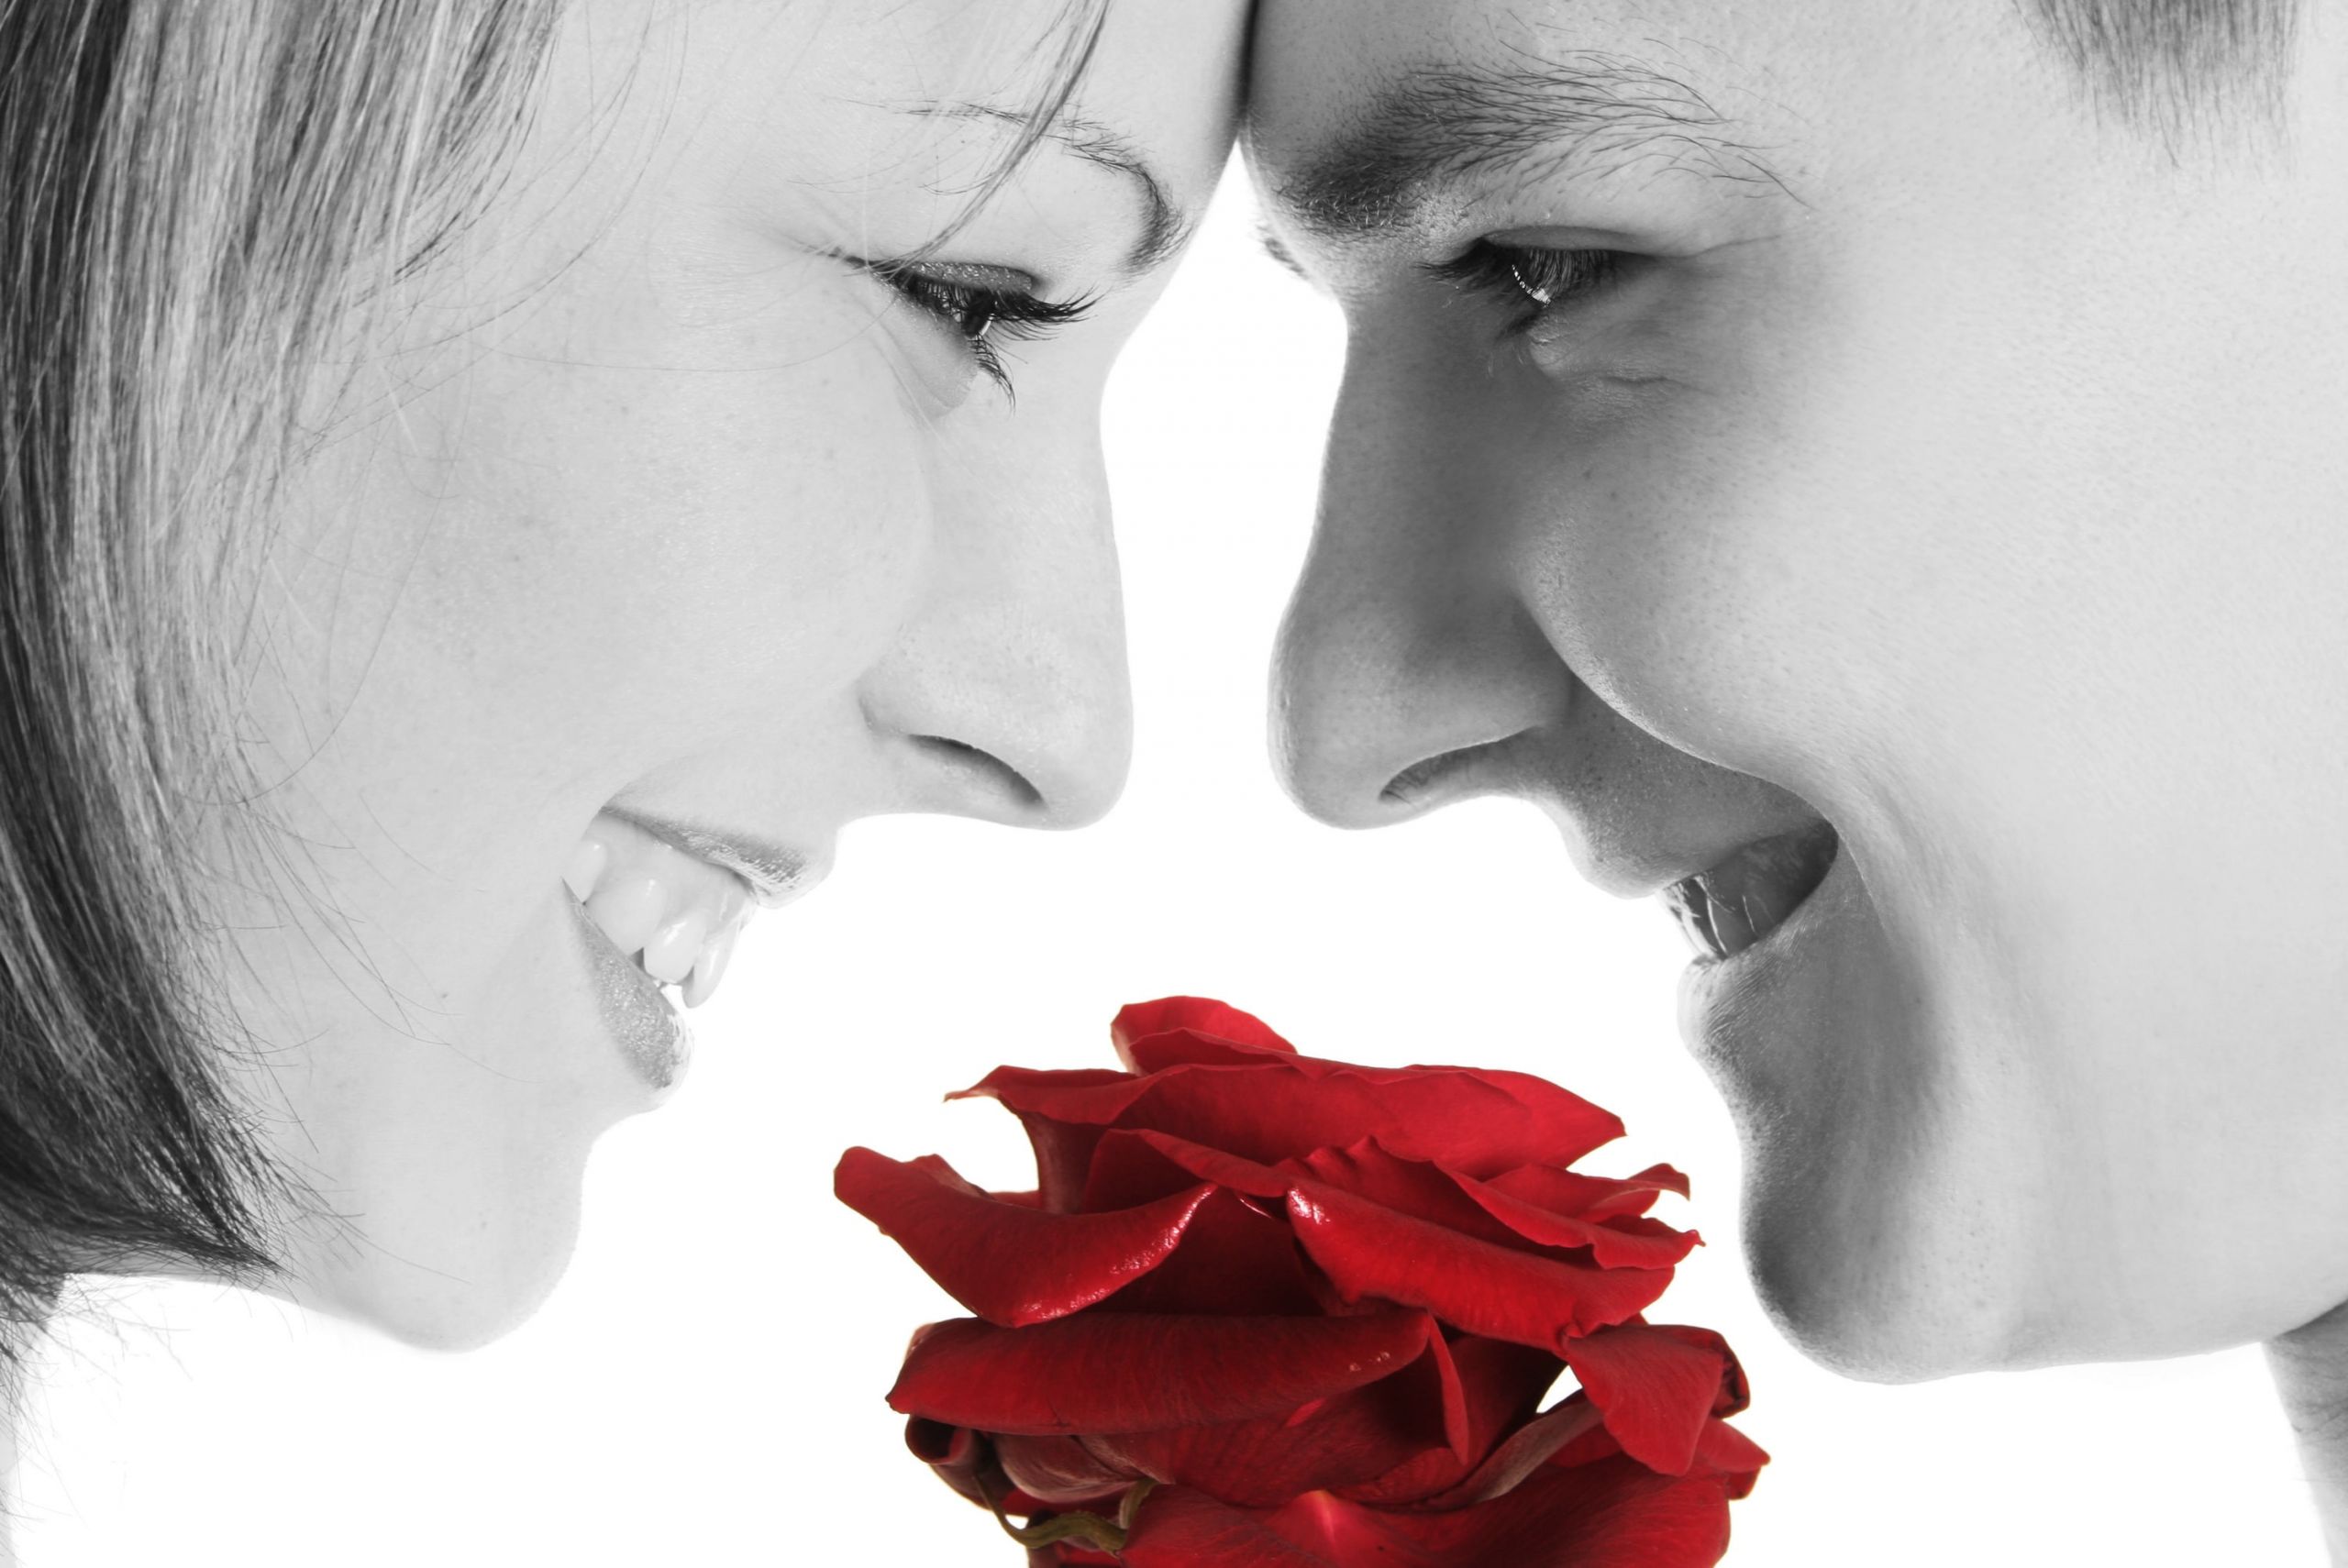 Cheap Gift Ideas For Girlfriend
 10 Romantic & Inexpensive Gift Ideas for Your Girlfriend